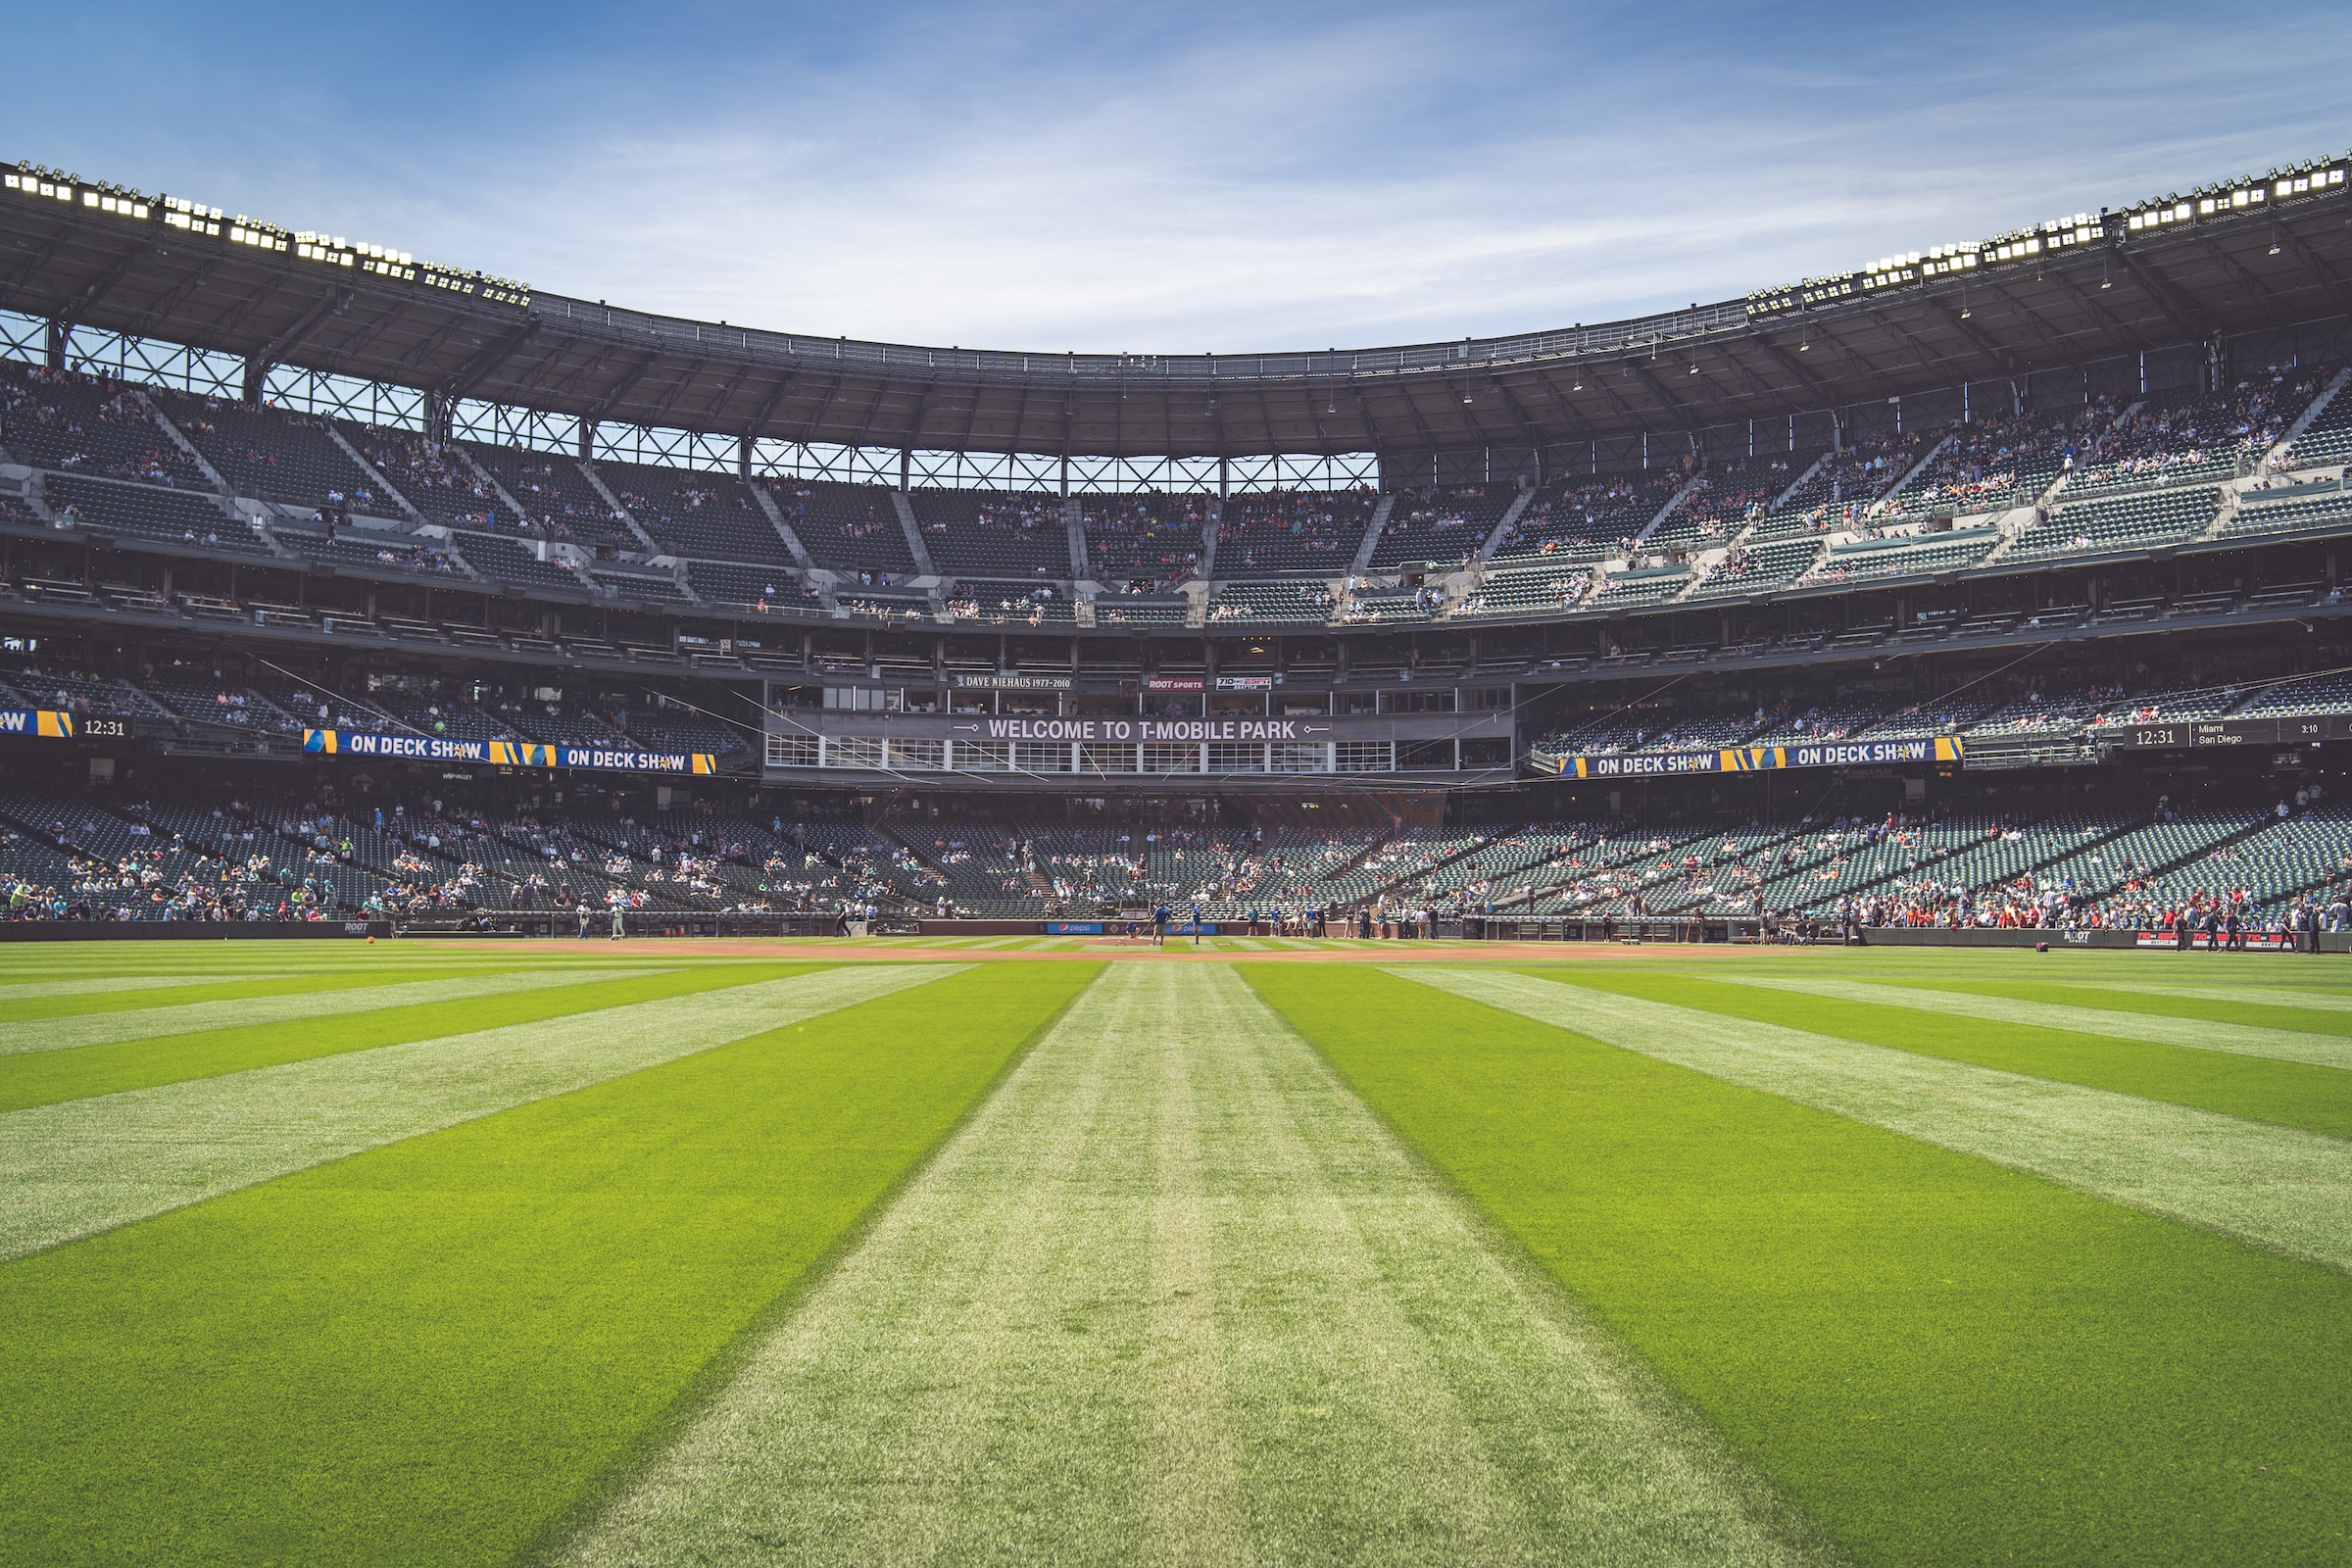 Baseball Field View From Center Field